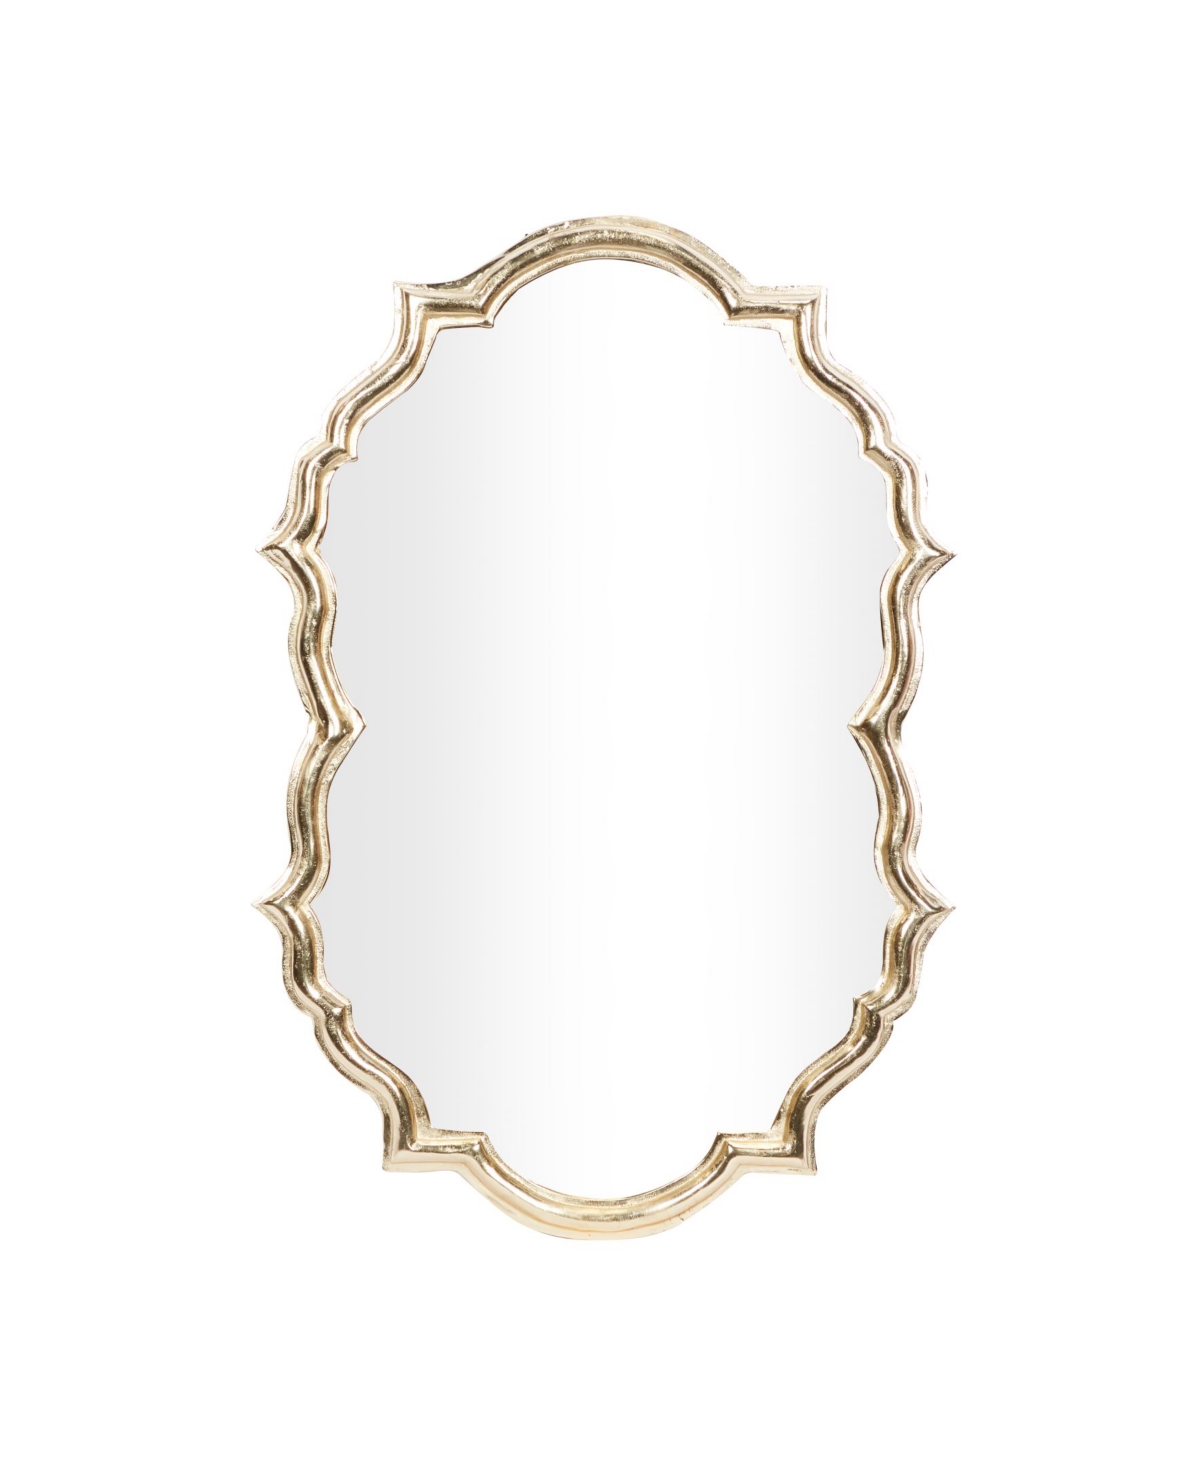 Contemporary Wall Mirror, 36" x 25" - Gold-Tone